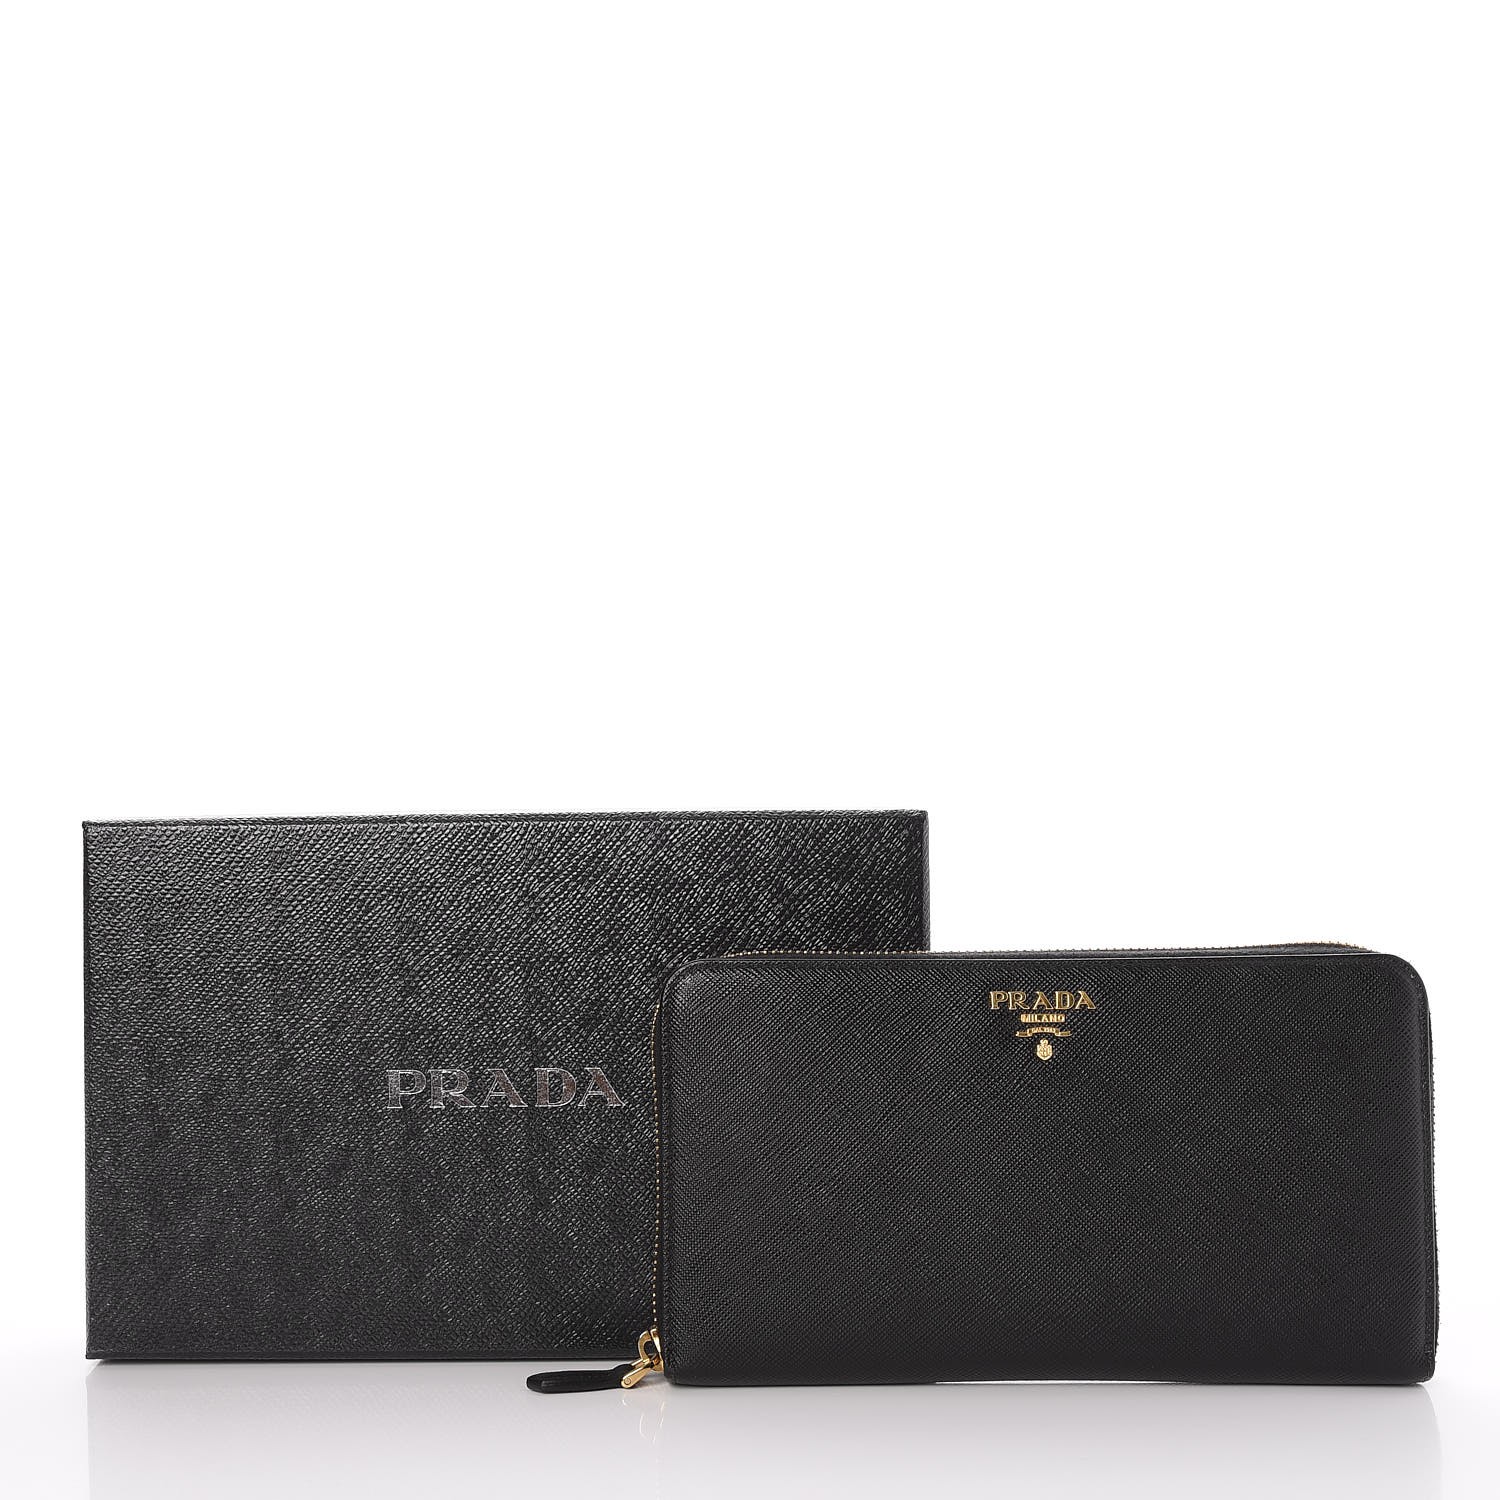 PRADA Saffiano Metal Large Zip Around Travel Wallet Nero Black 260535